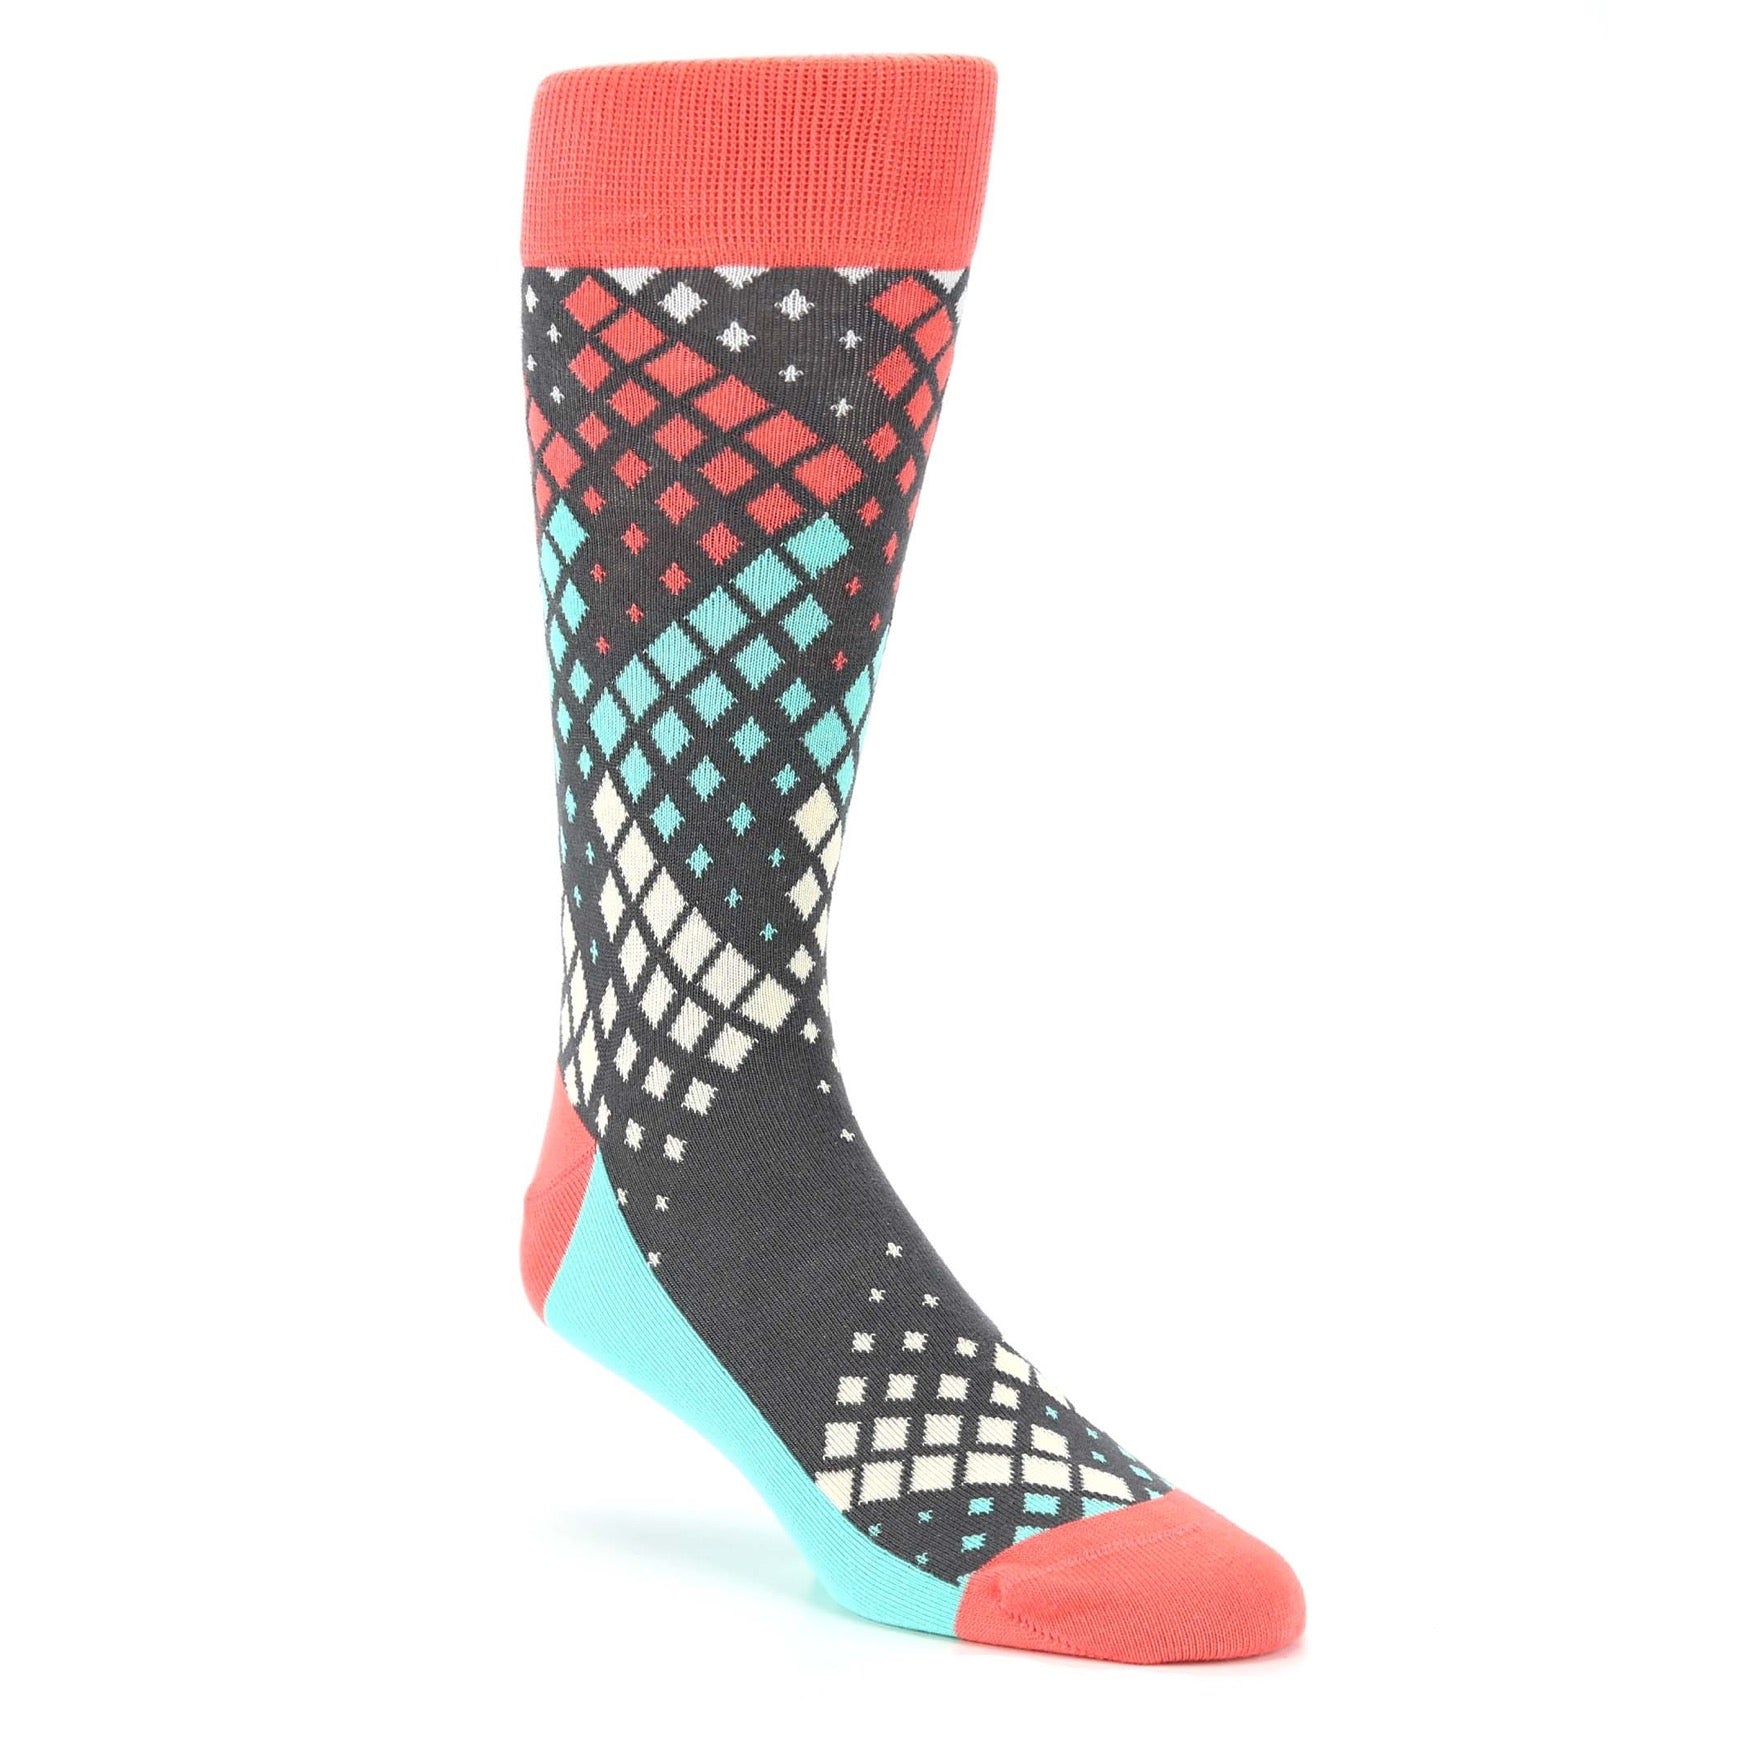 Teal Red Fading Squares Socks - Men's Dress Socks